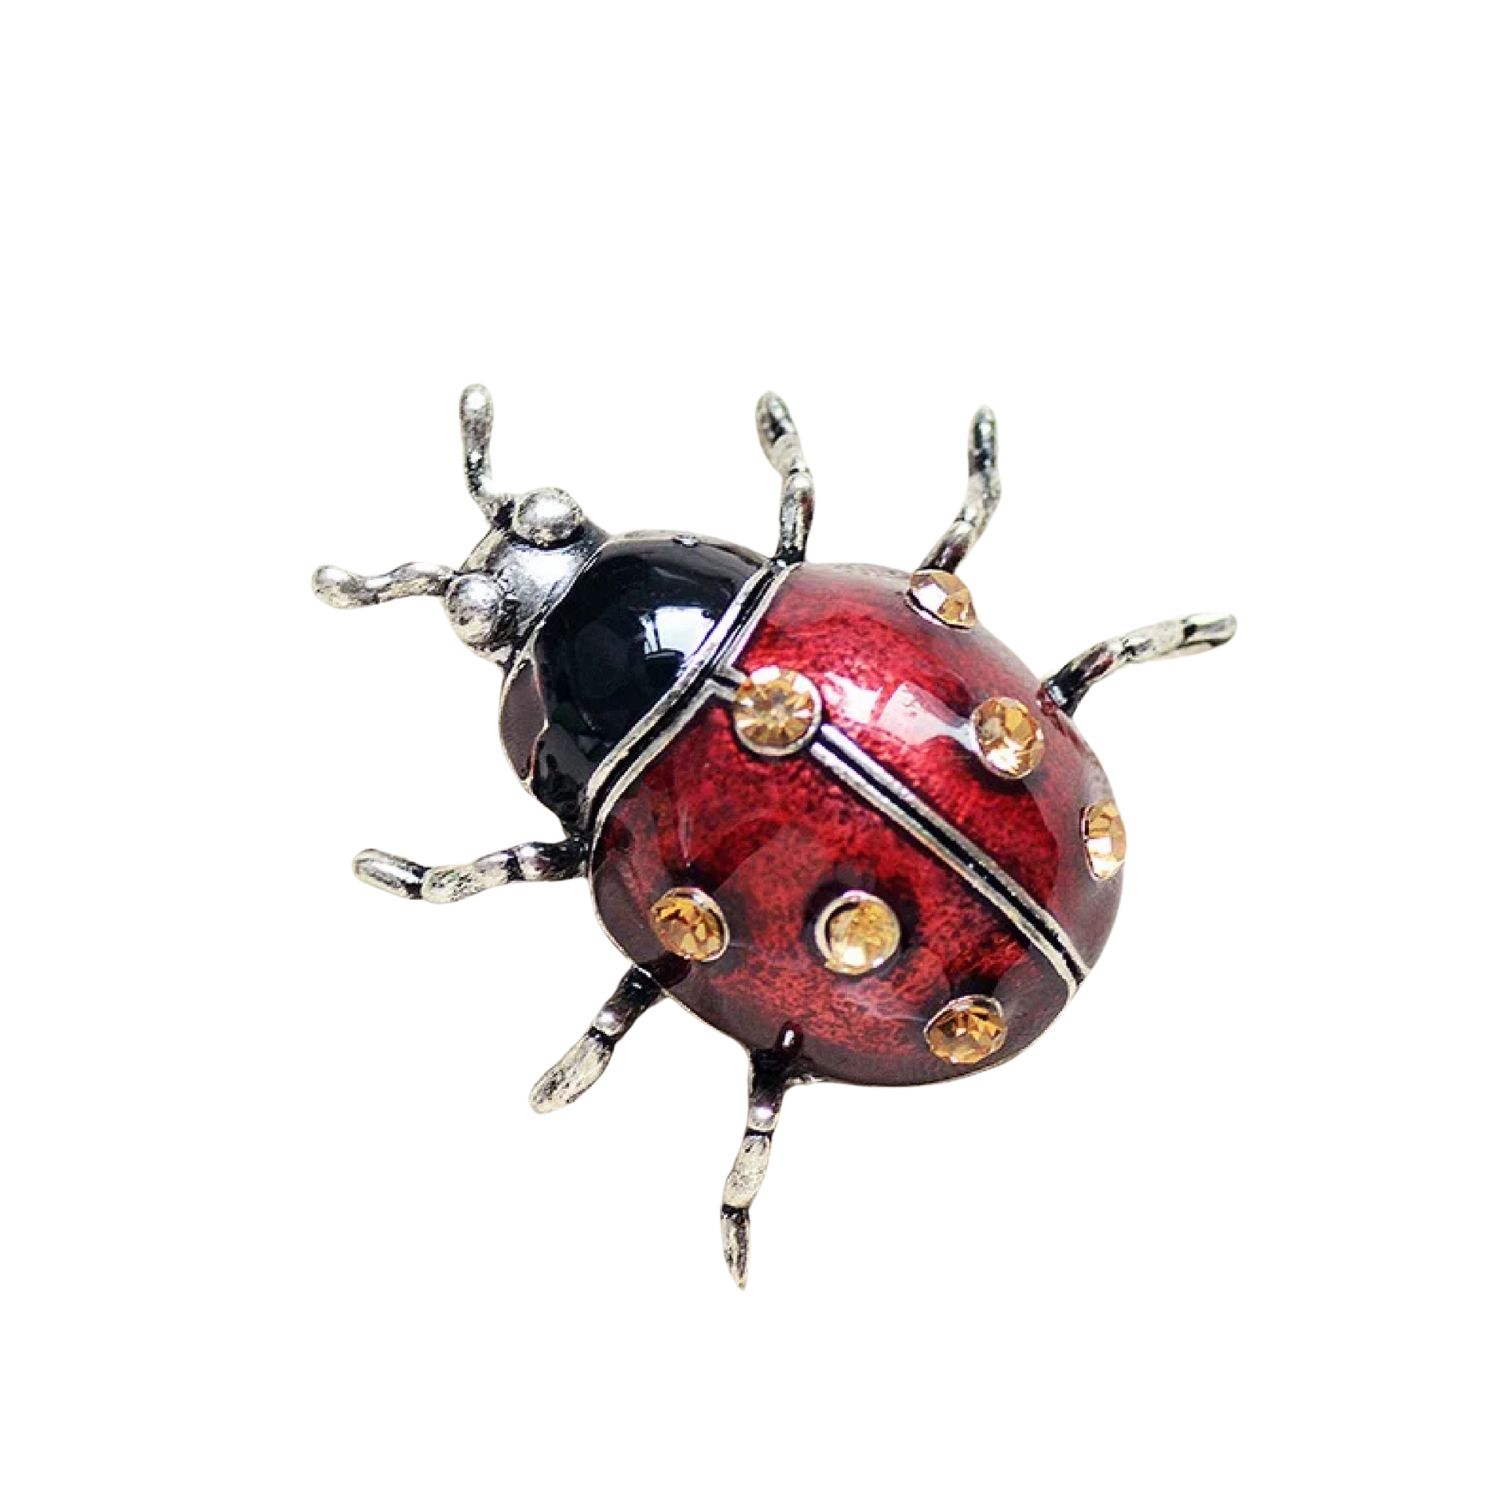 View 3: Red Black ladybug brooch